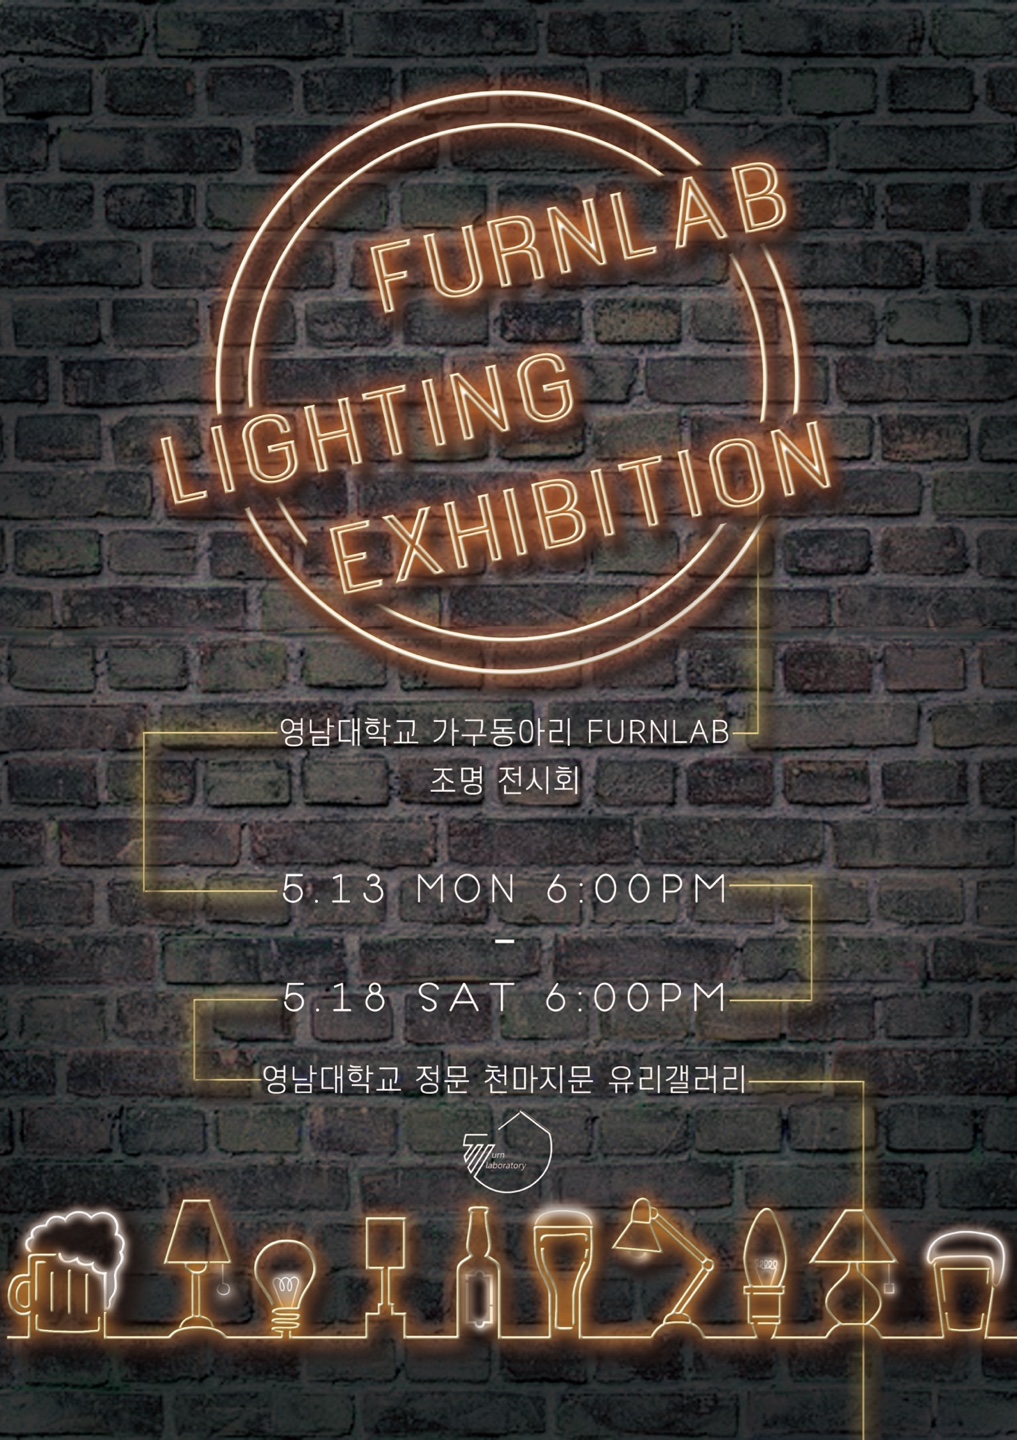 2019 'Furnlab' Lighting Exhibition